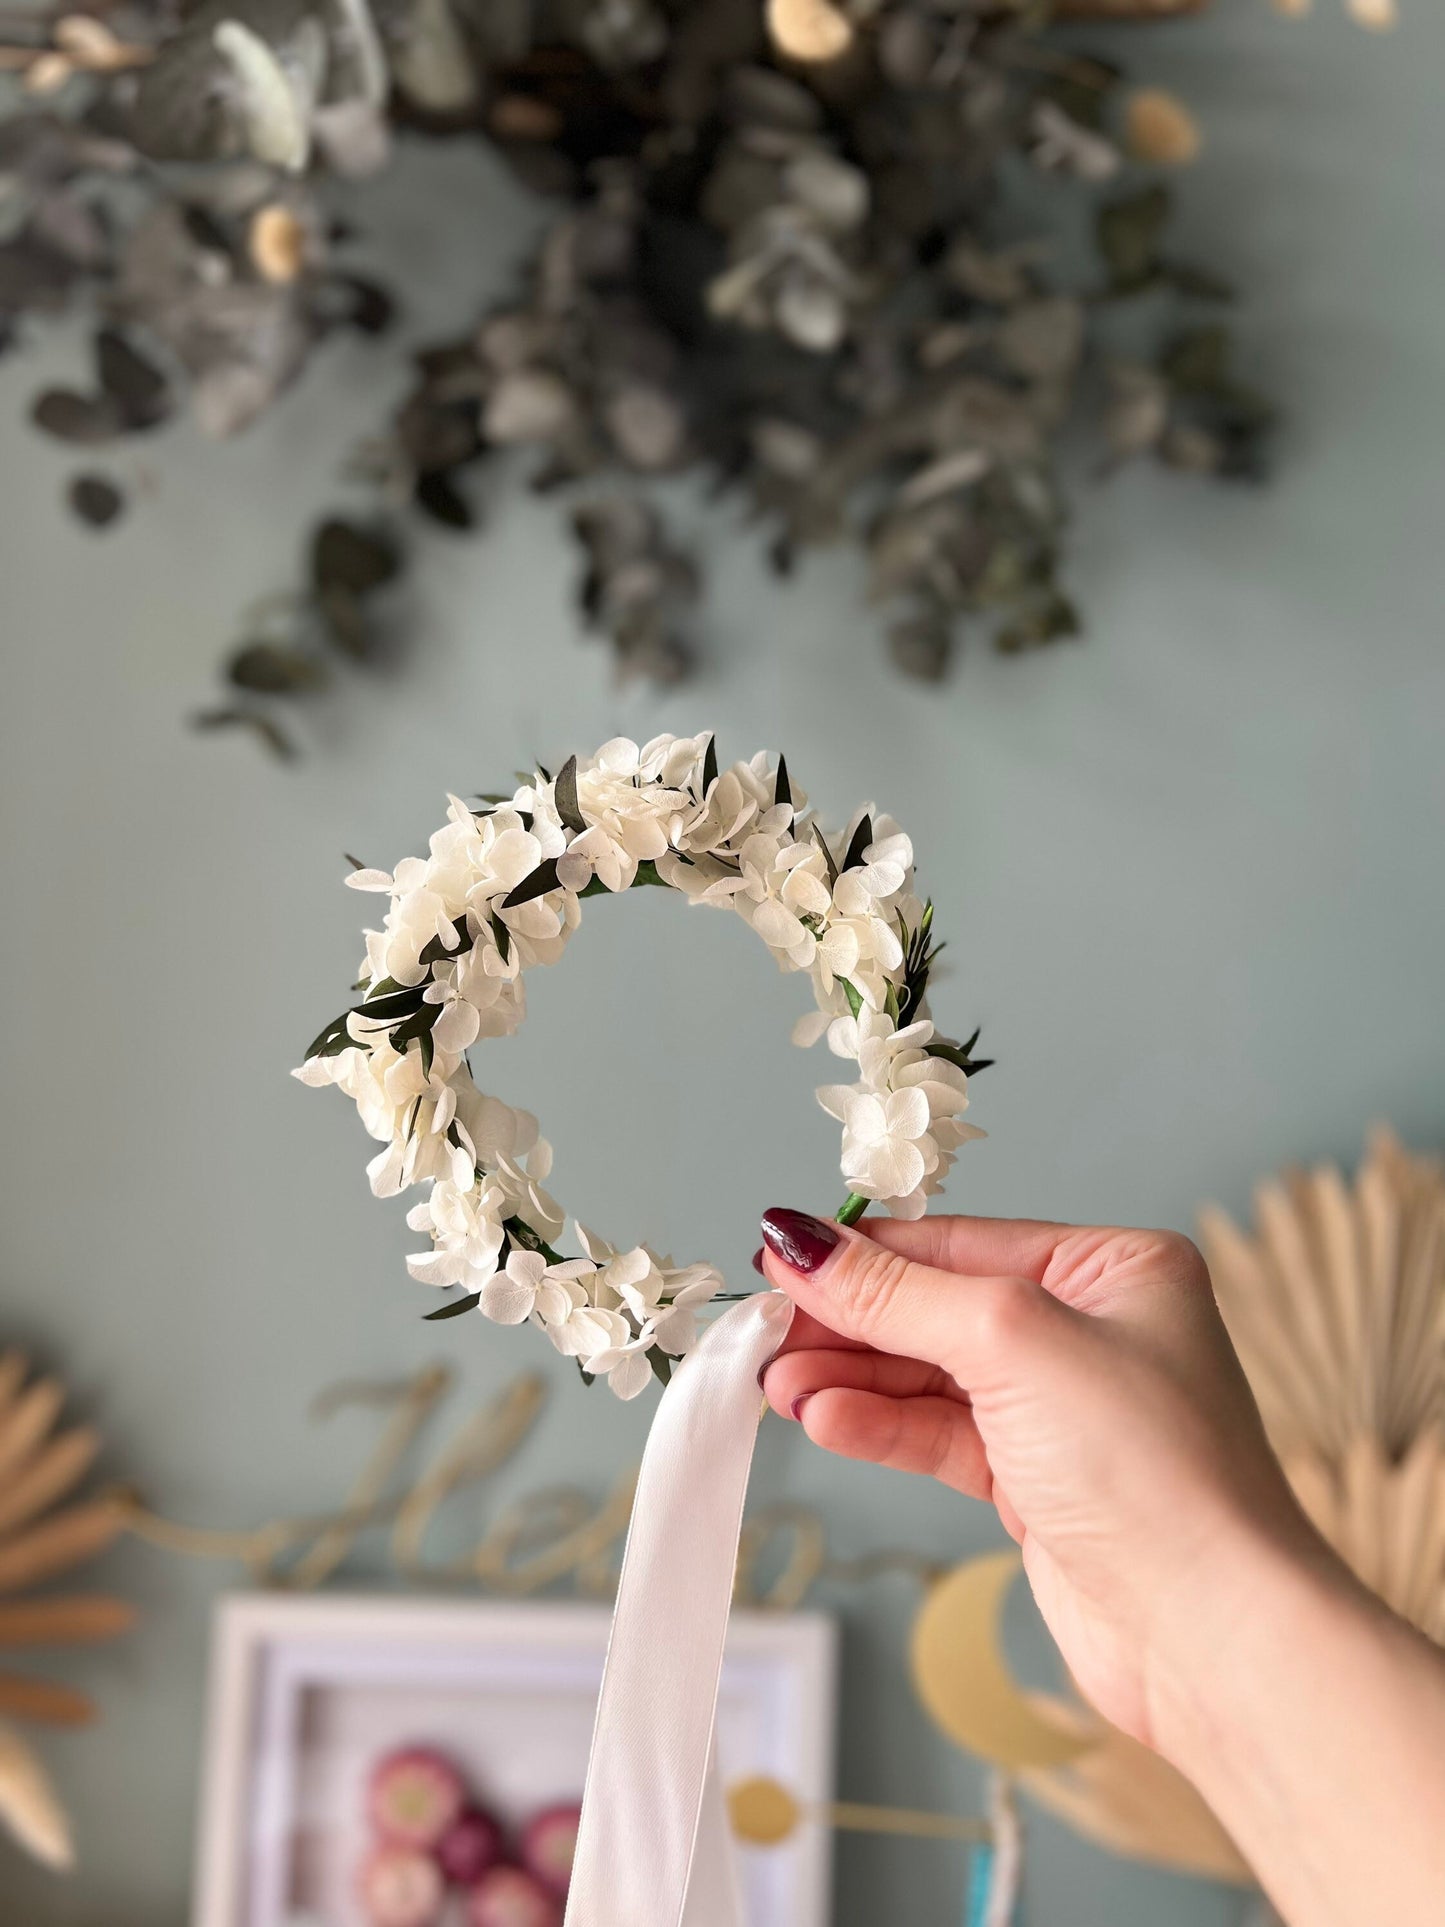 White and Green Leafy Flower Hair Halo Crown Christening for Baby Girls Toddler or Wedding Flower Girl Hair Wreath Handmade